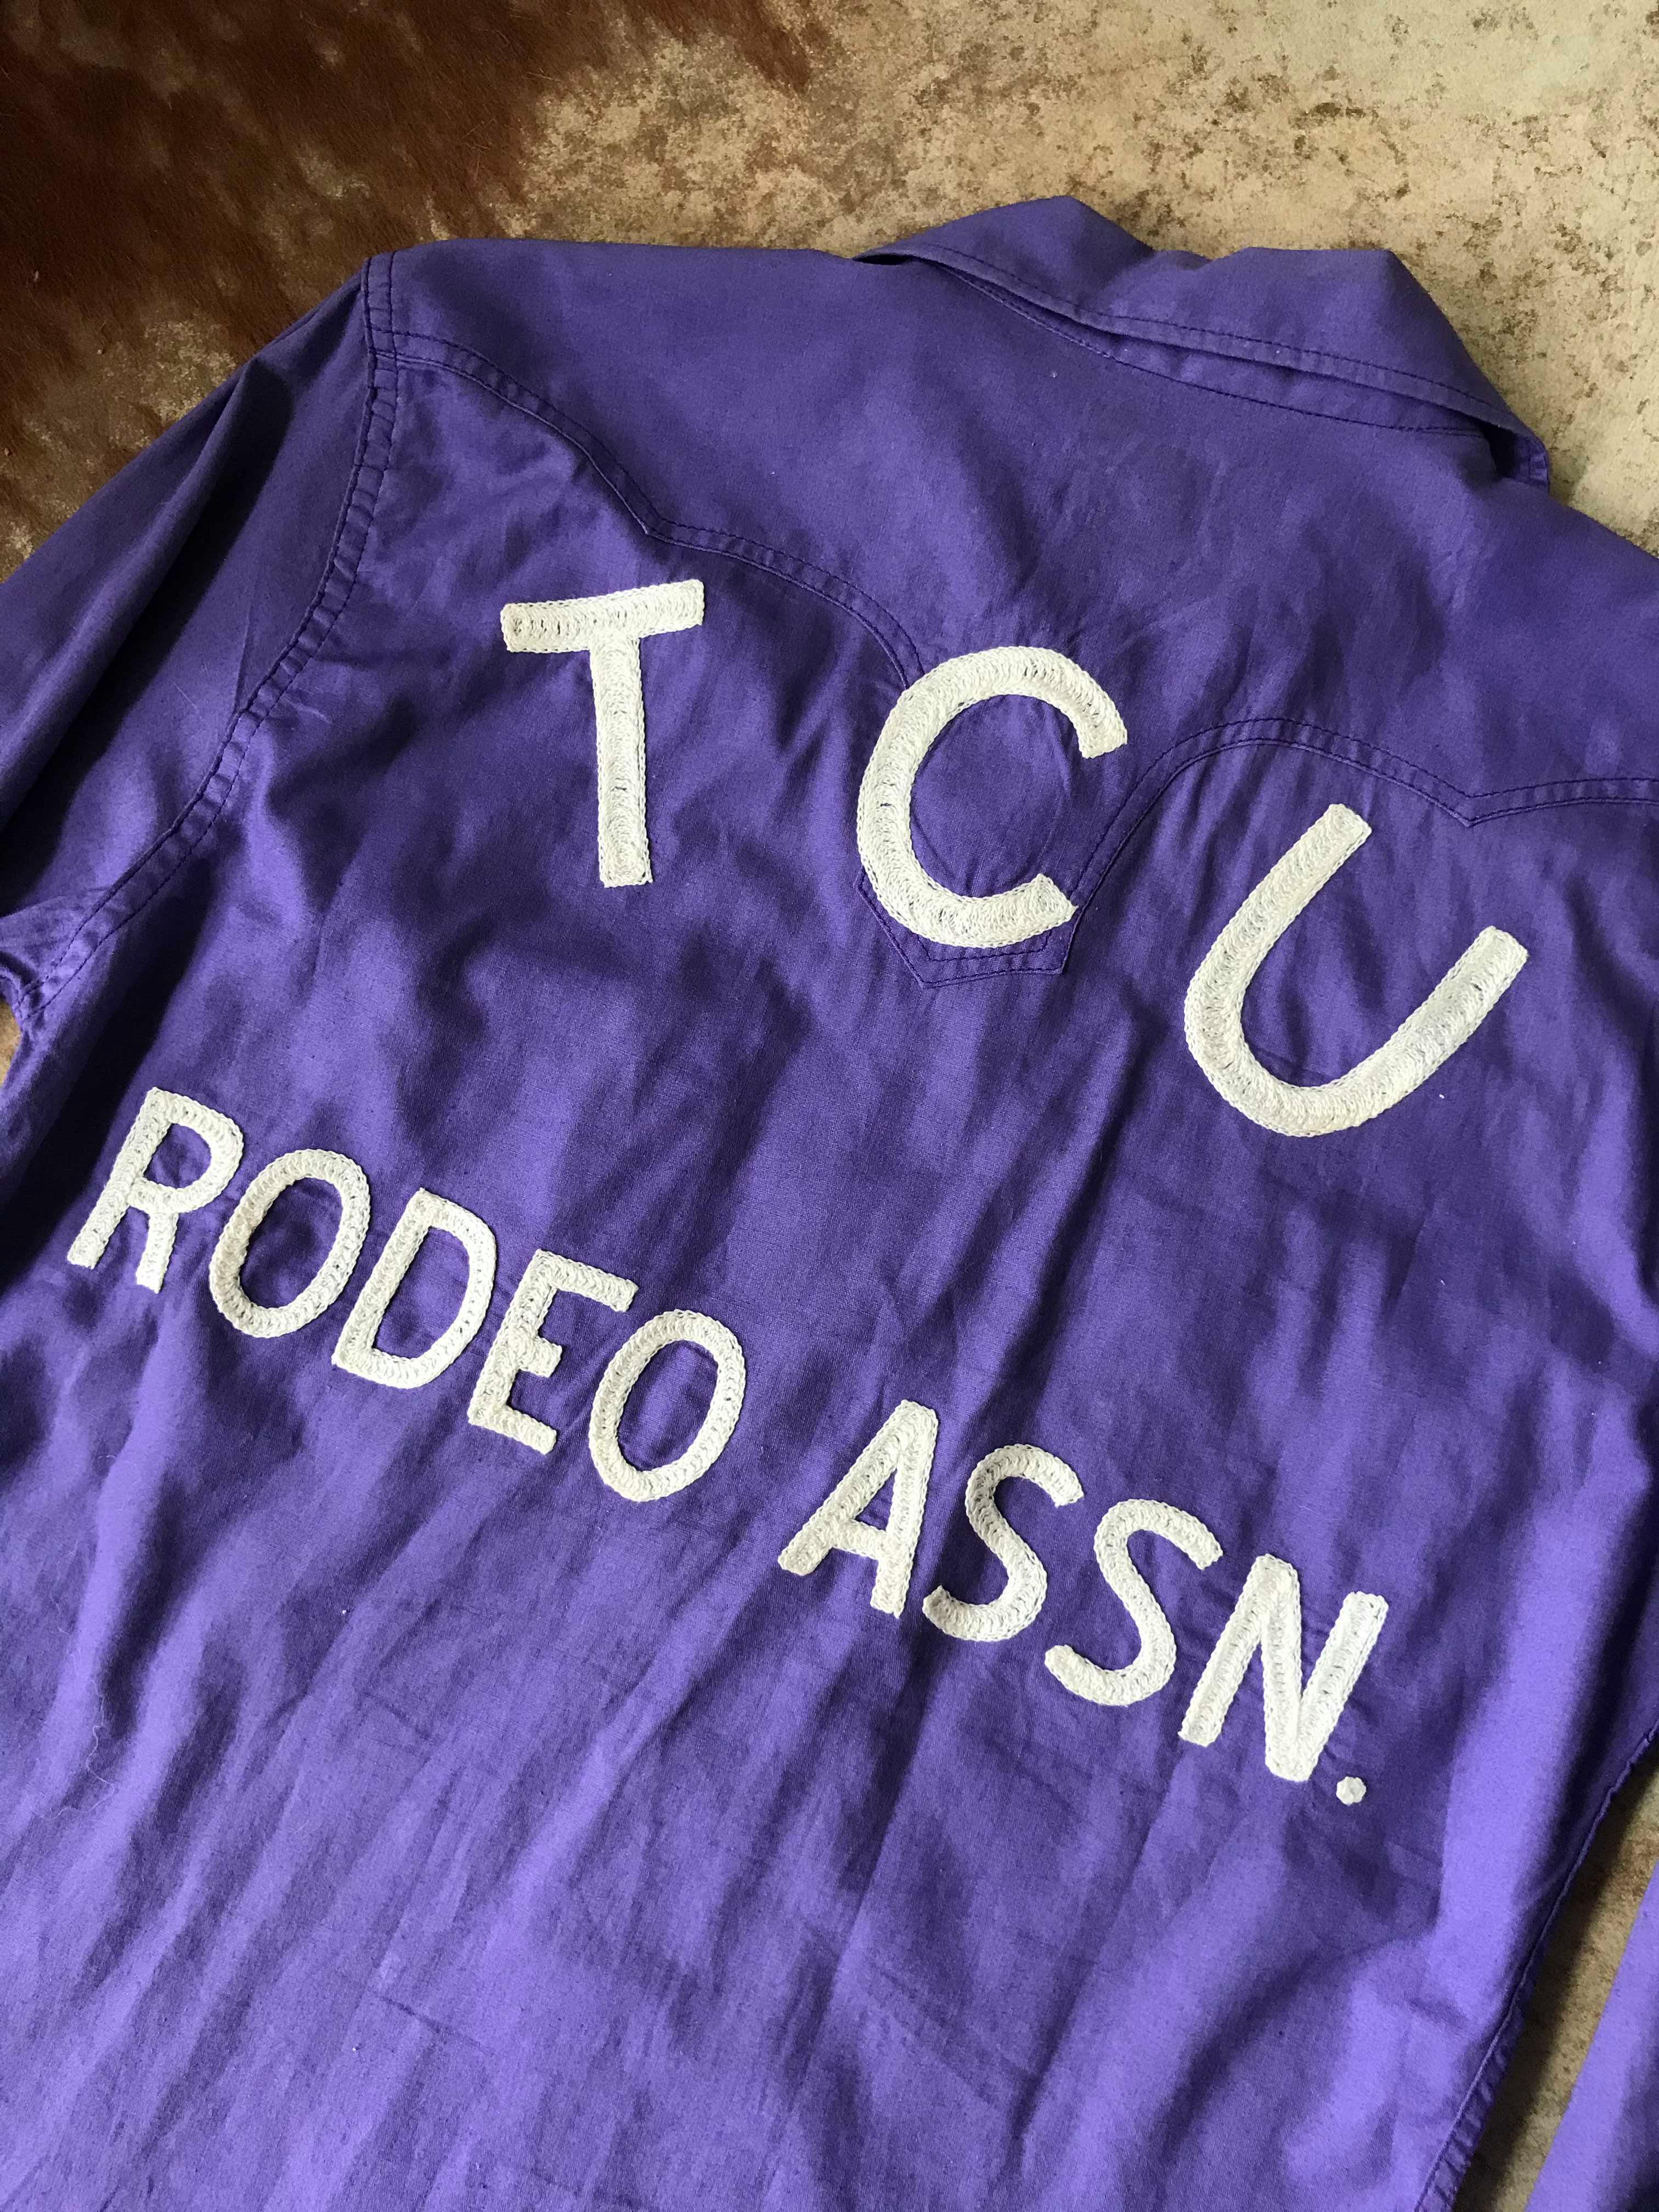 Vintage Rodeo Shirt